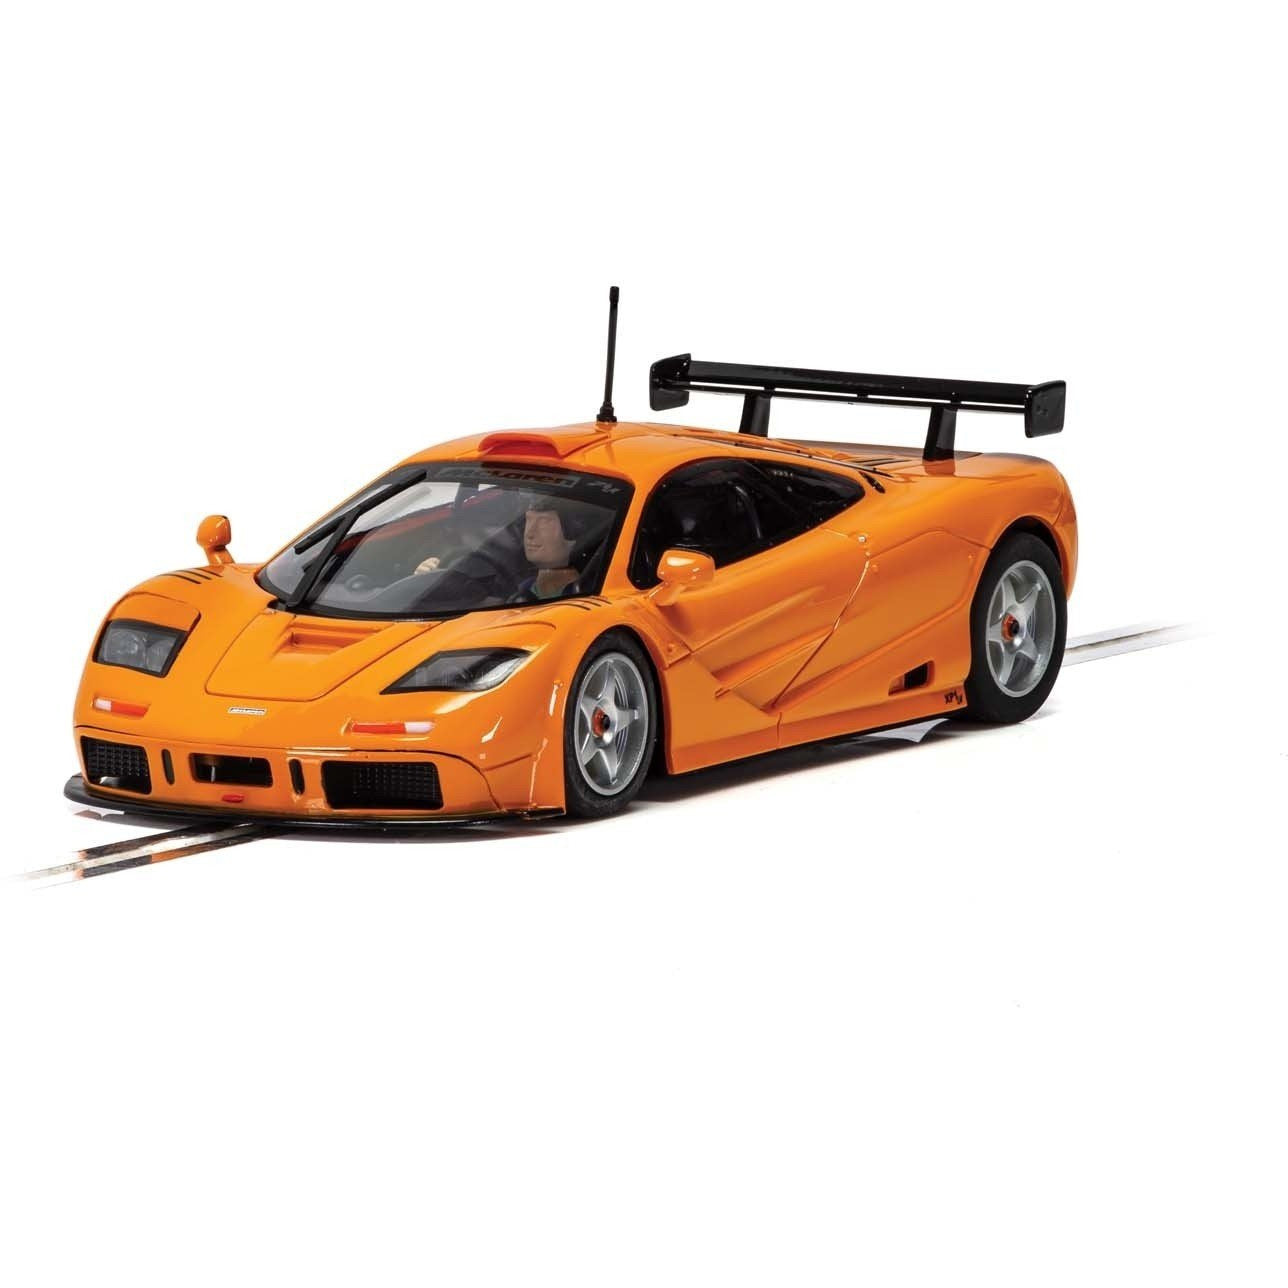 McLaren F1 GYR Papaya Orange Slot Car #C4102